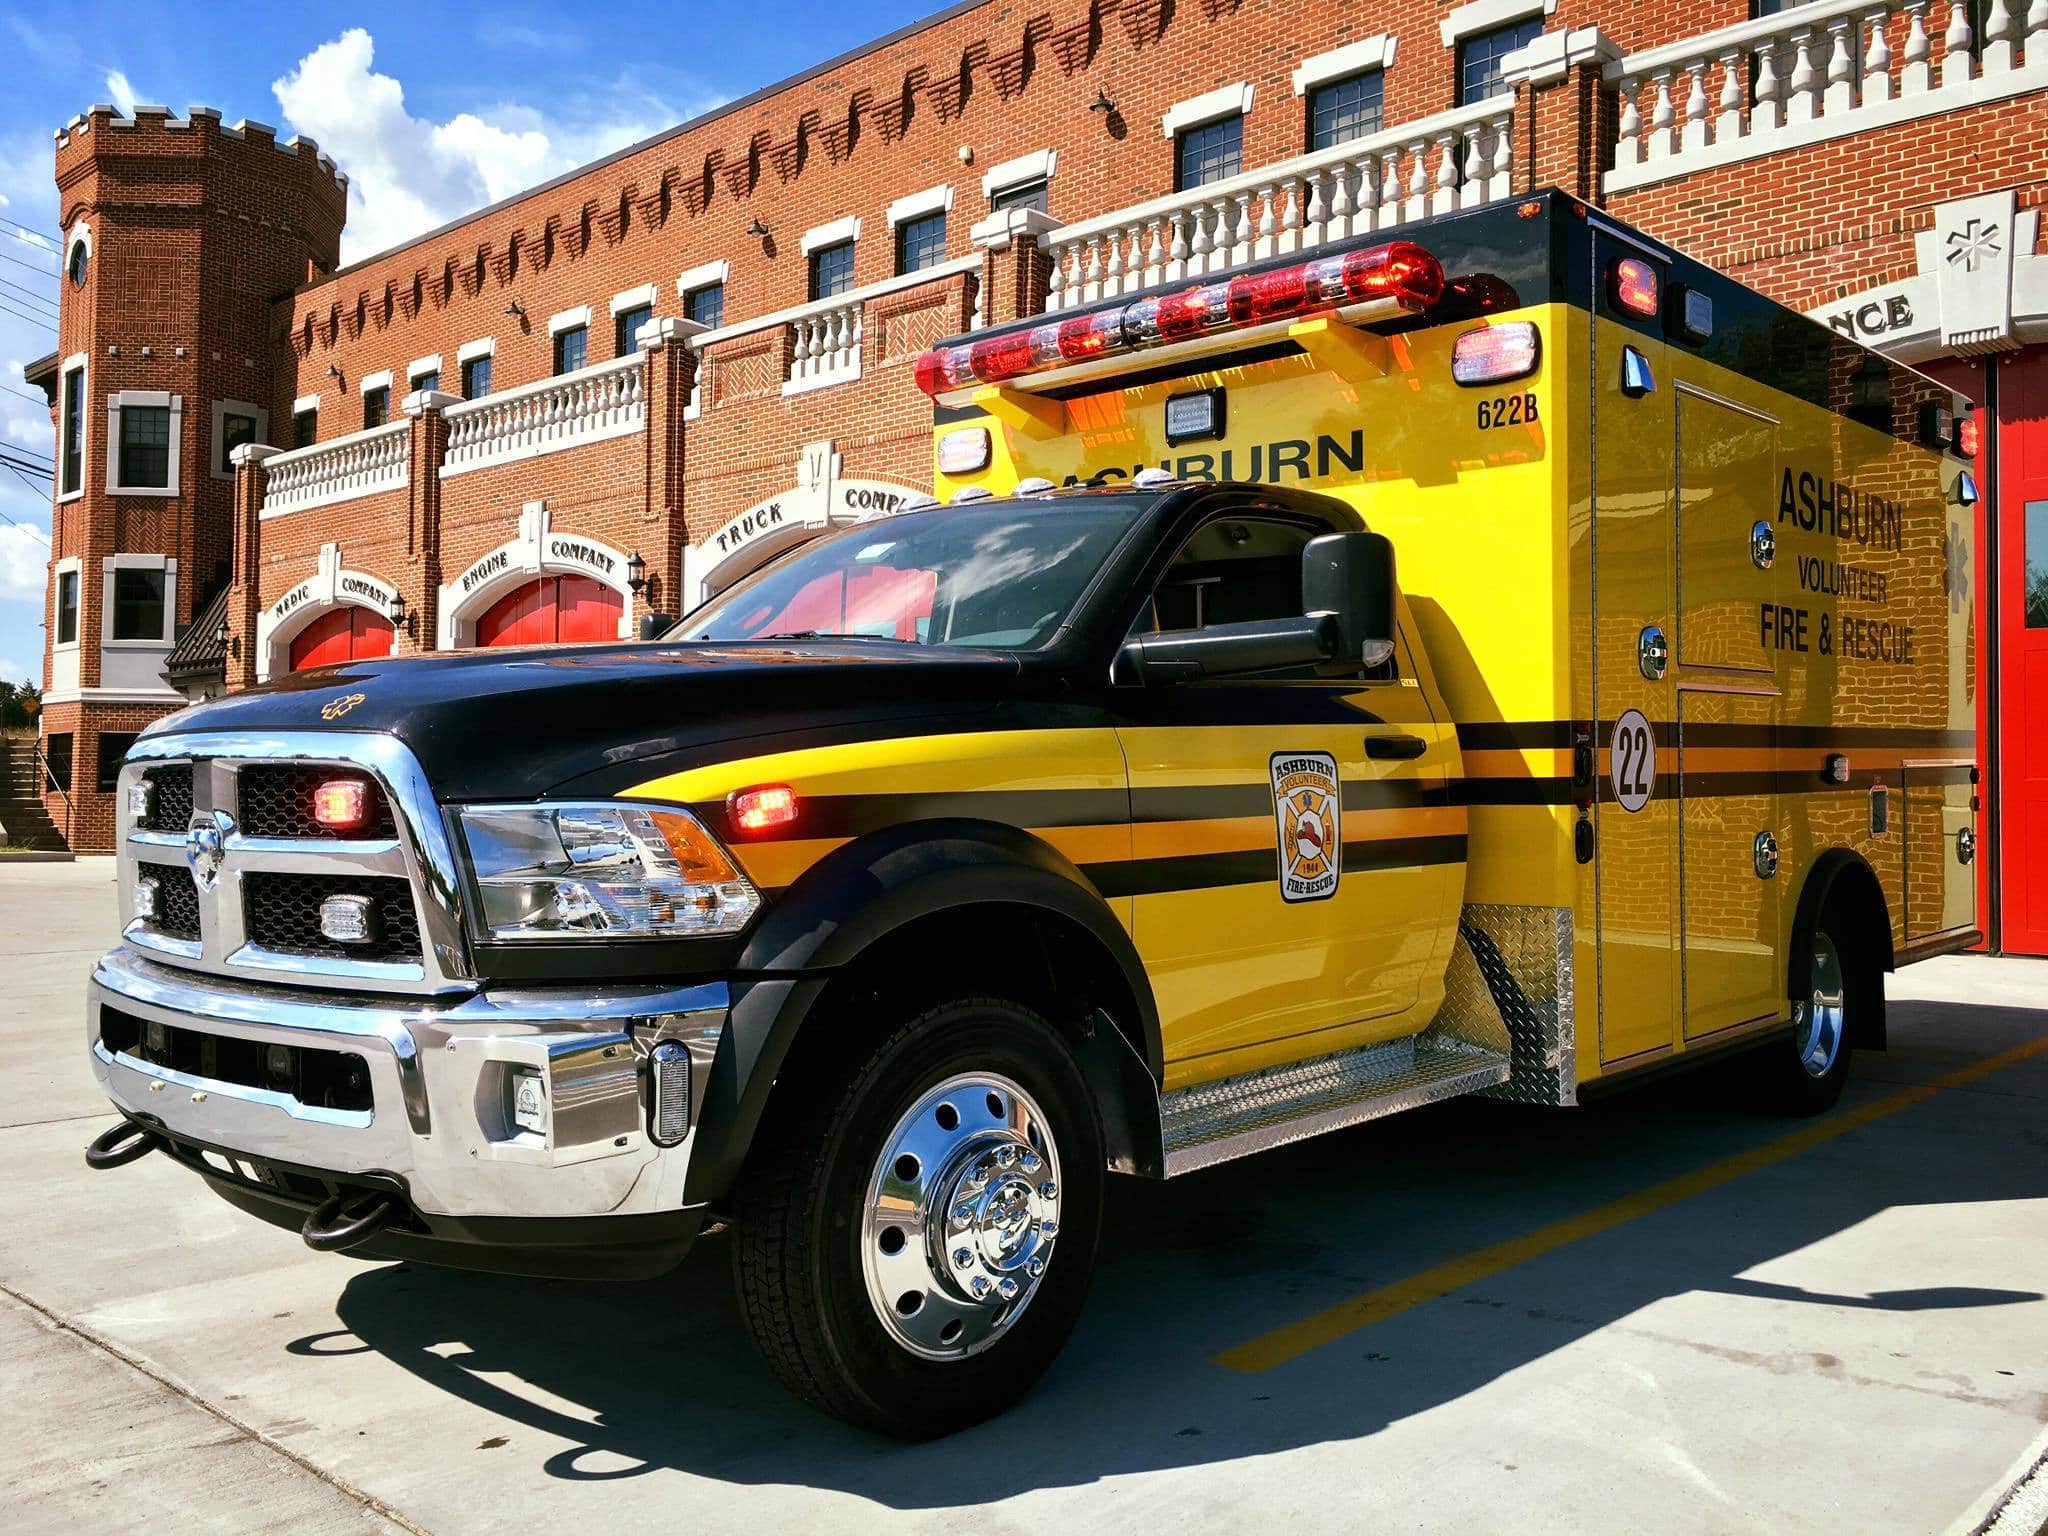 Ashburn Ambulance 622